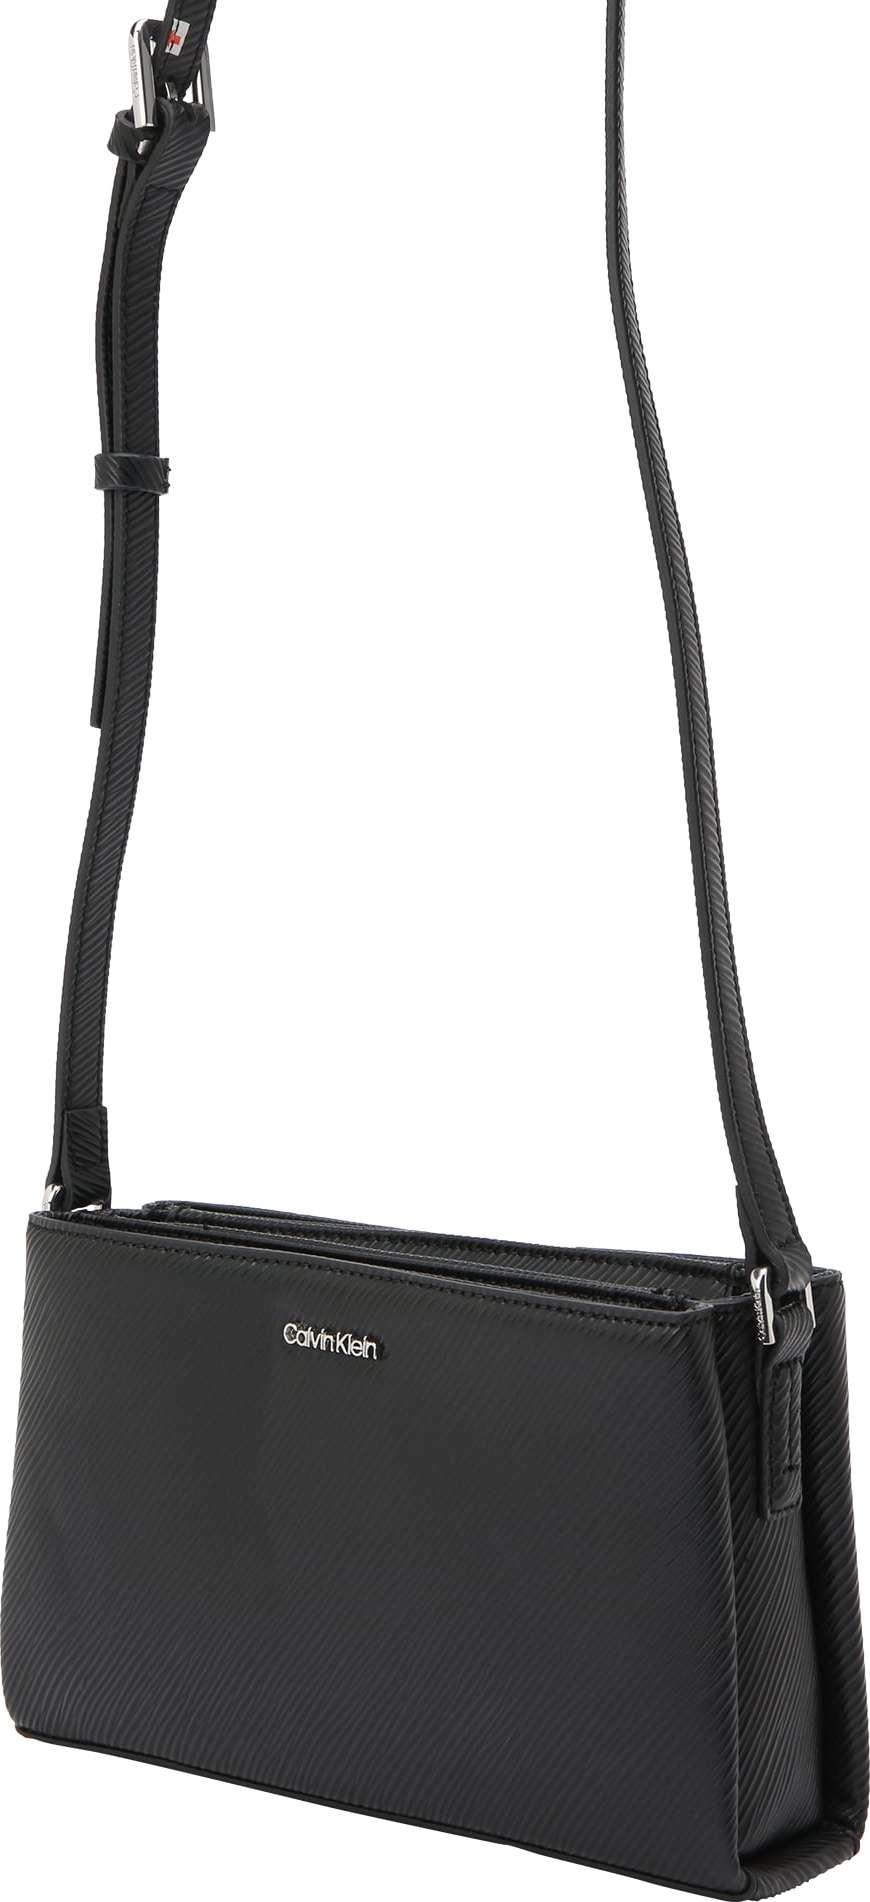 Calvin Klein Taška přes rameno 'SAFFIANO' černá